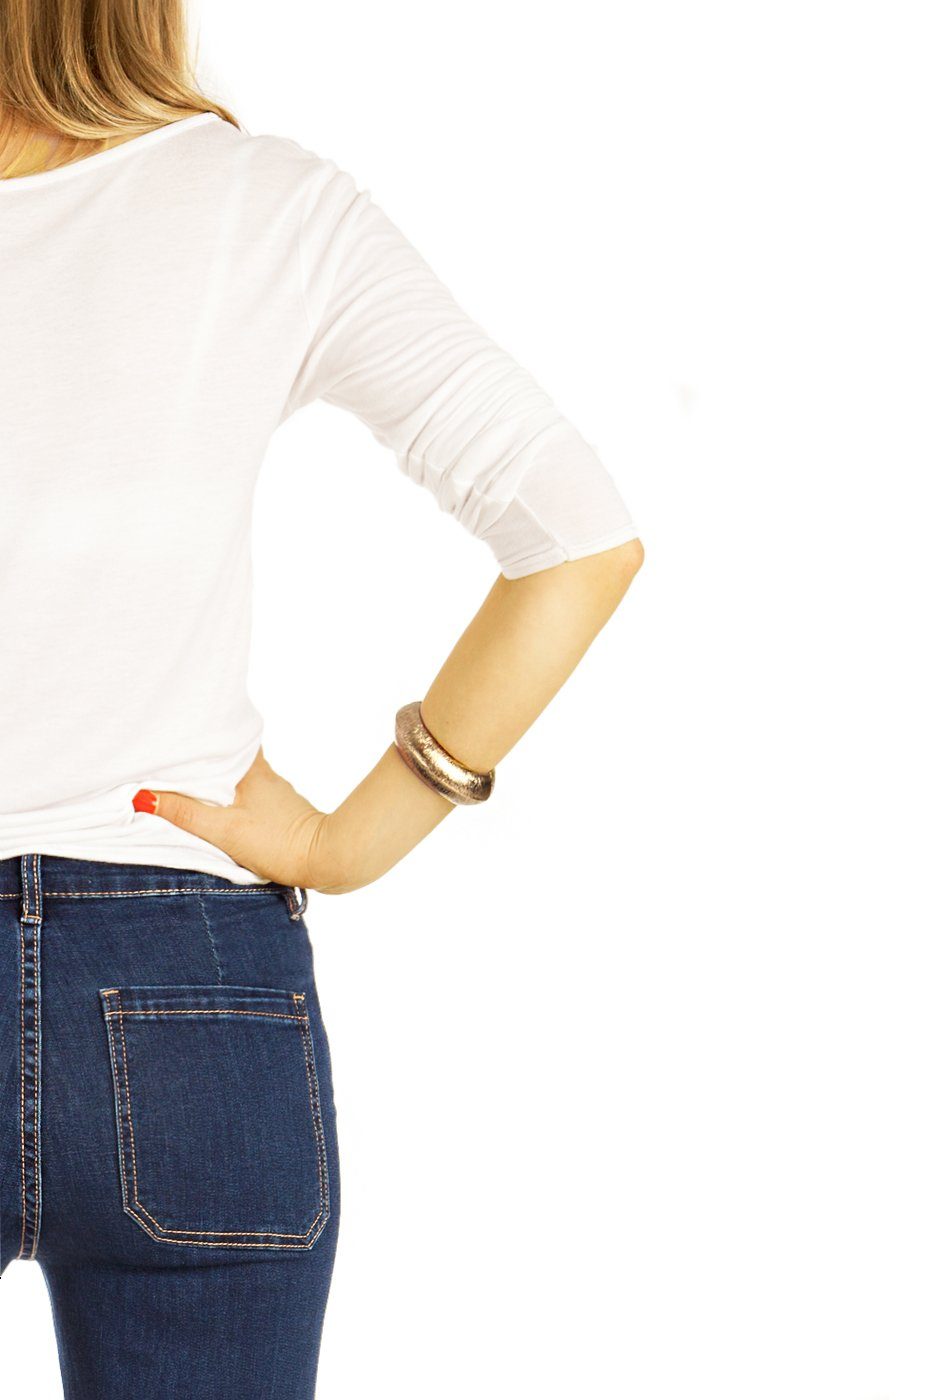 Damen Jeans, hellblau be mit medium - waist Bootcut Hosen 5-Pocket-Style j31k Stretch-Anteil, - straight Bootcut-Jeans Passform styled